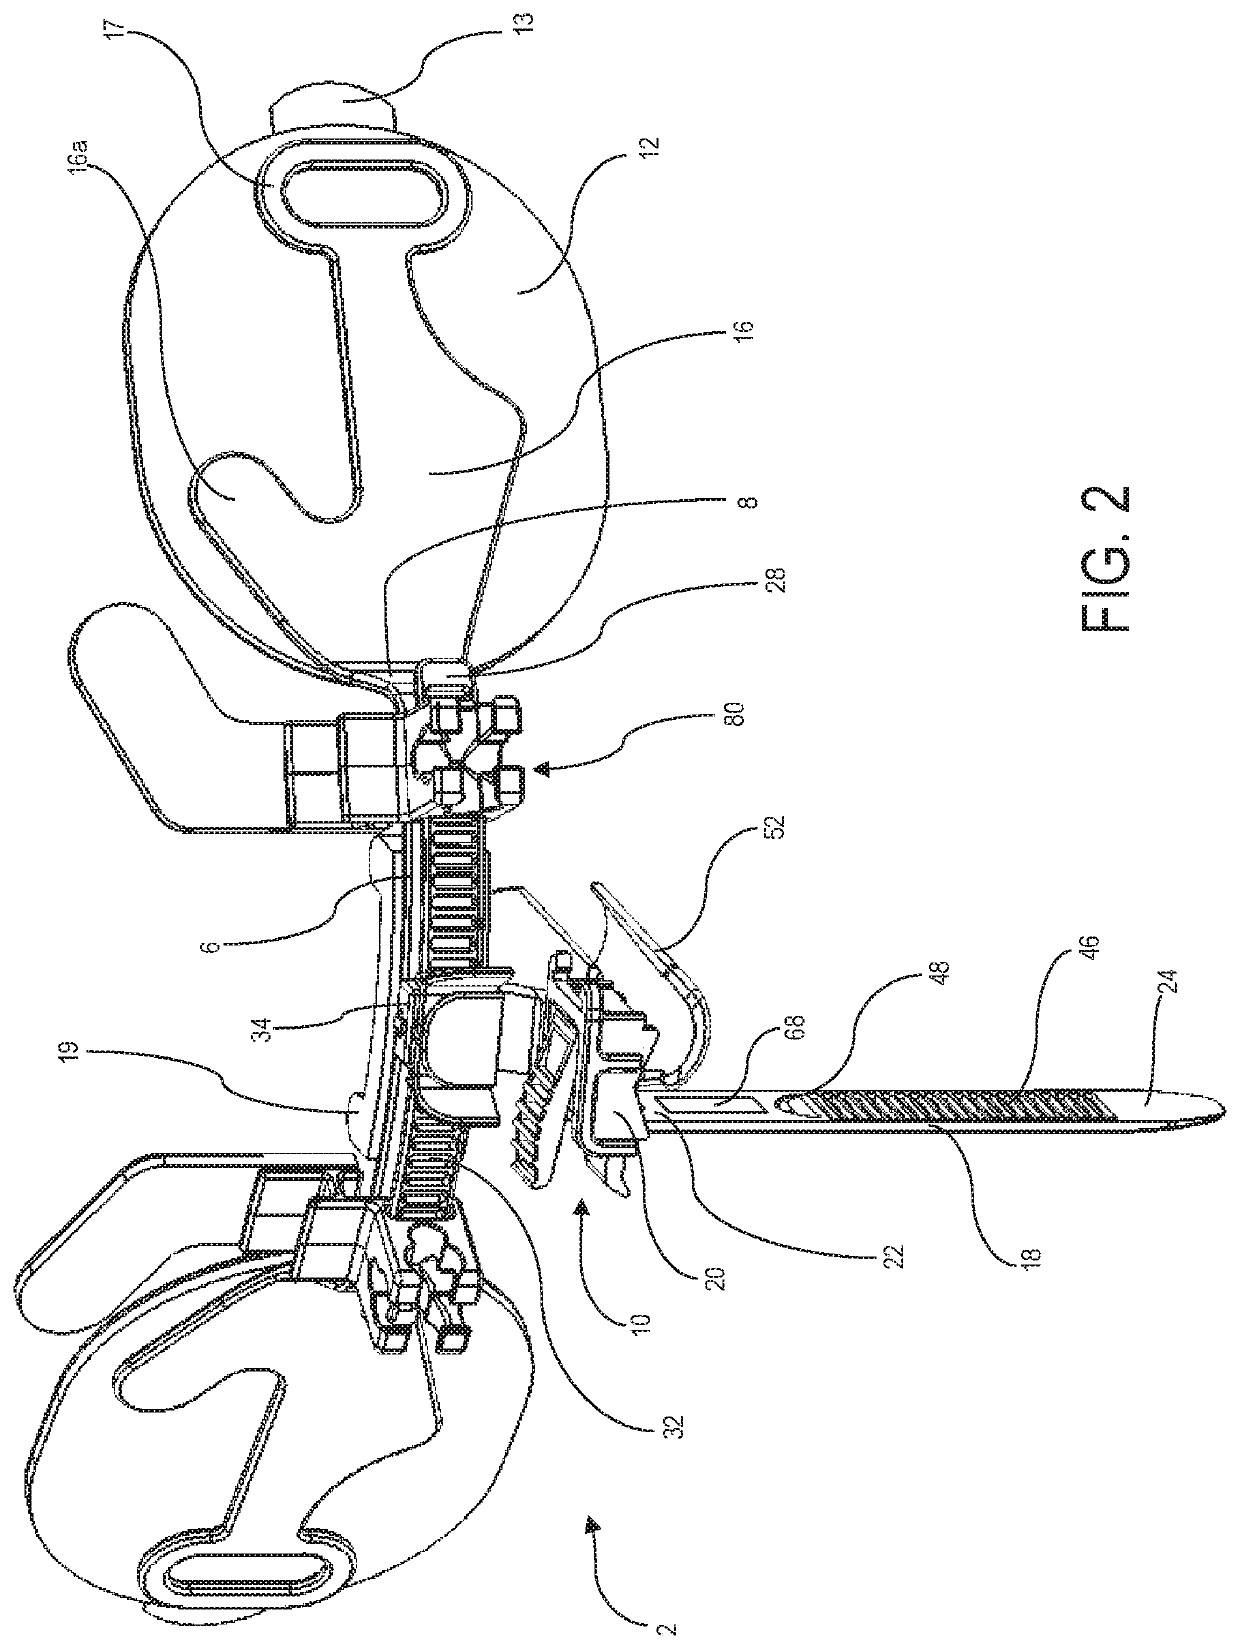 Endotracheal tube holder device